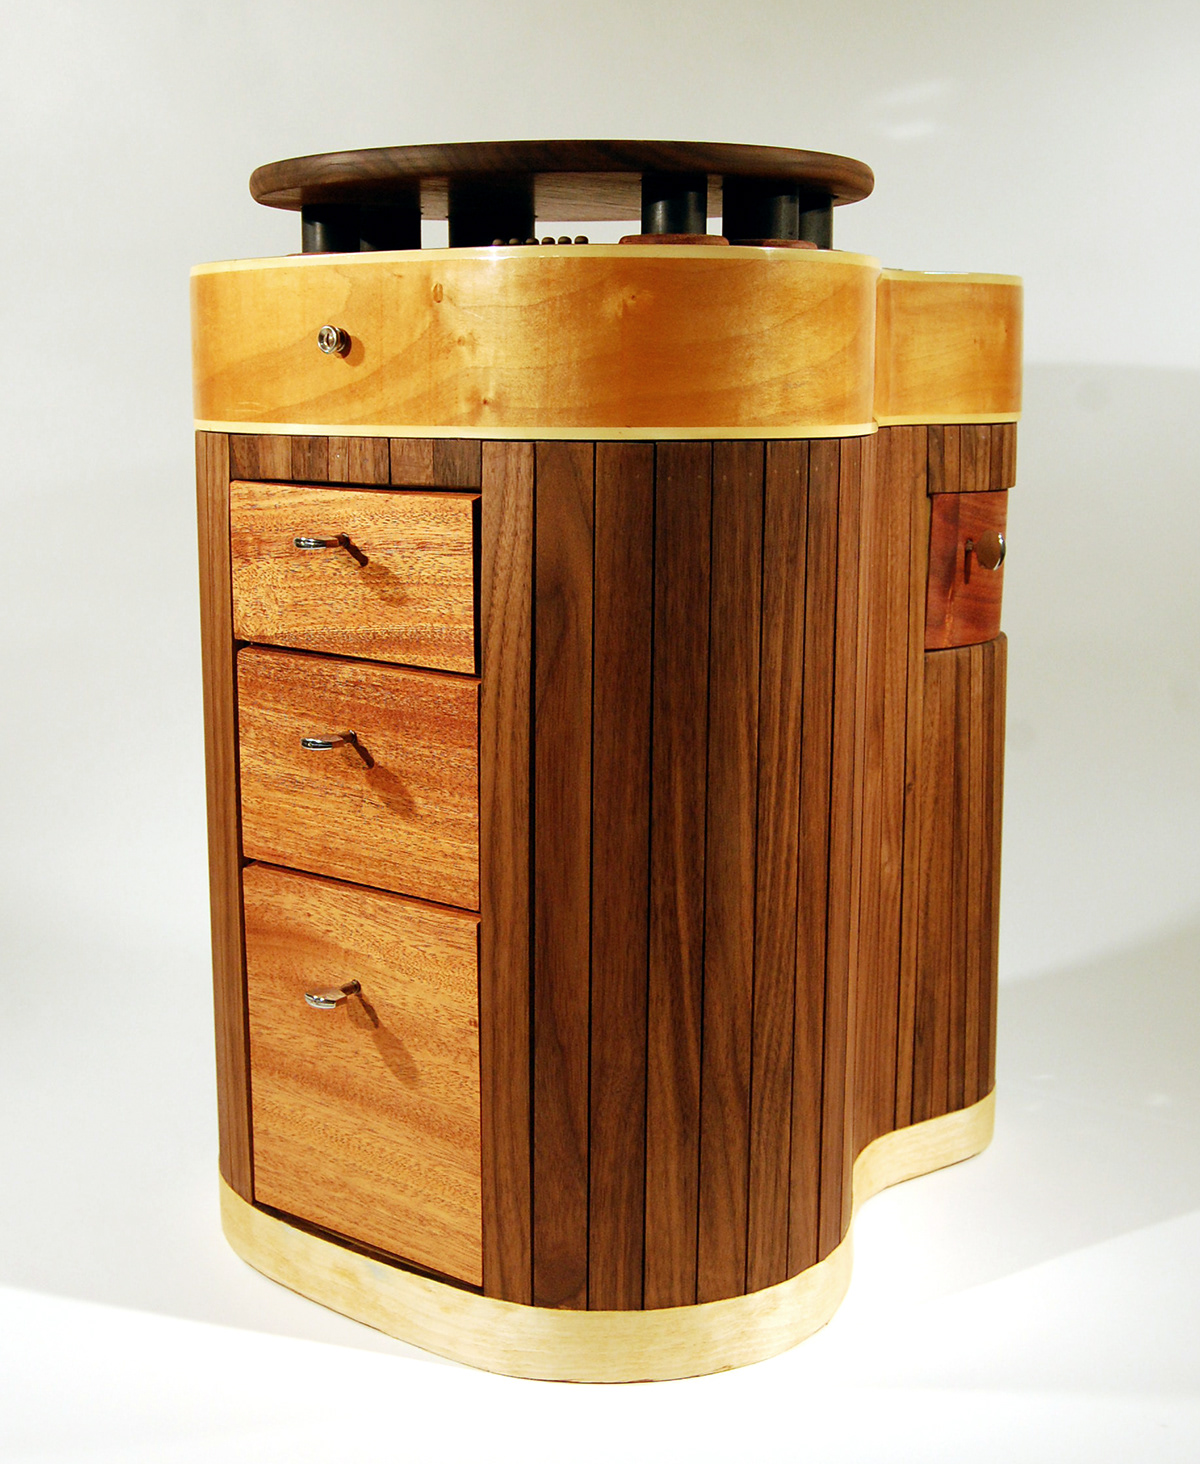 guitar wood table stool drawer walnut mahogany birch strings bridge tune design craft multi pattern